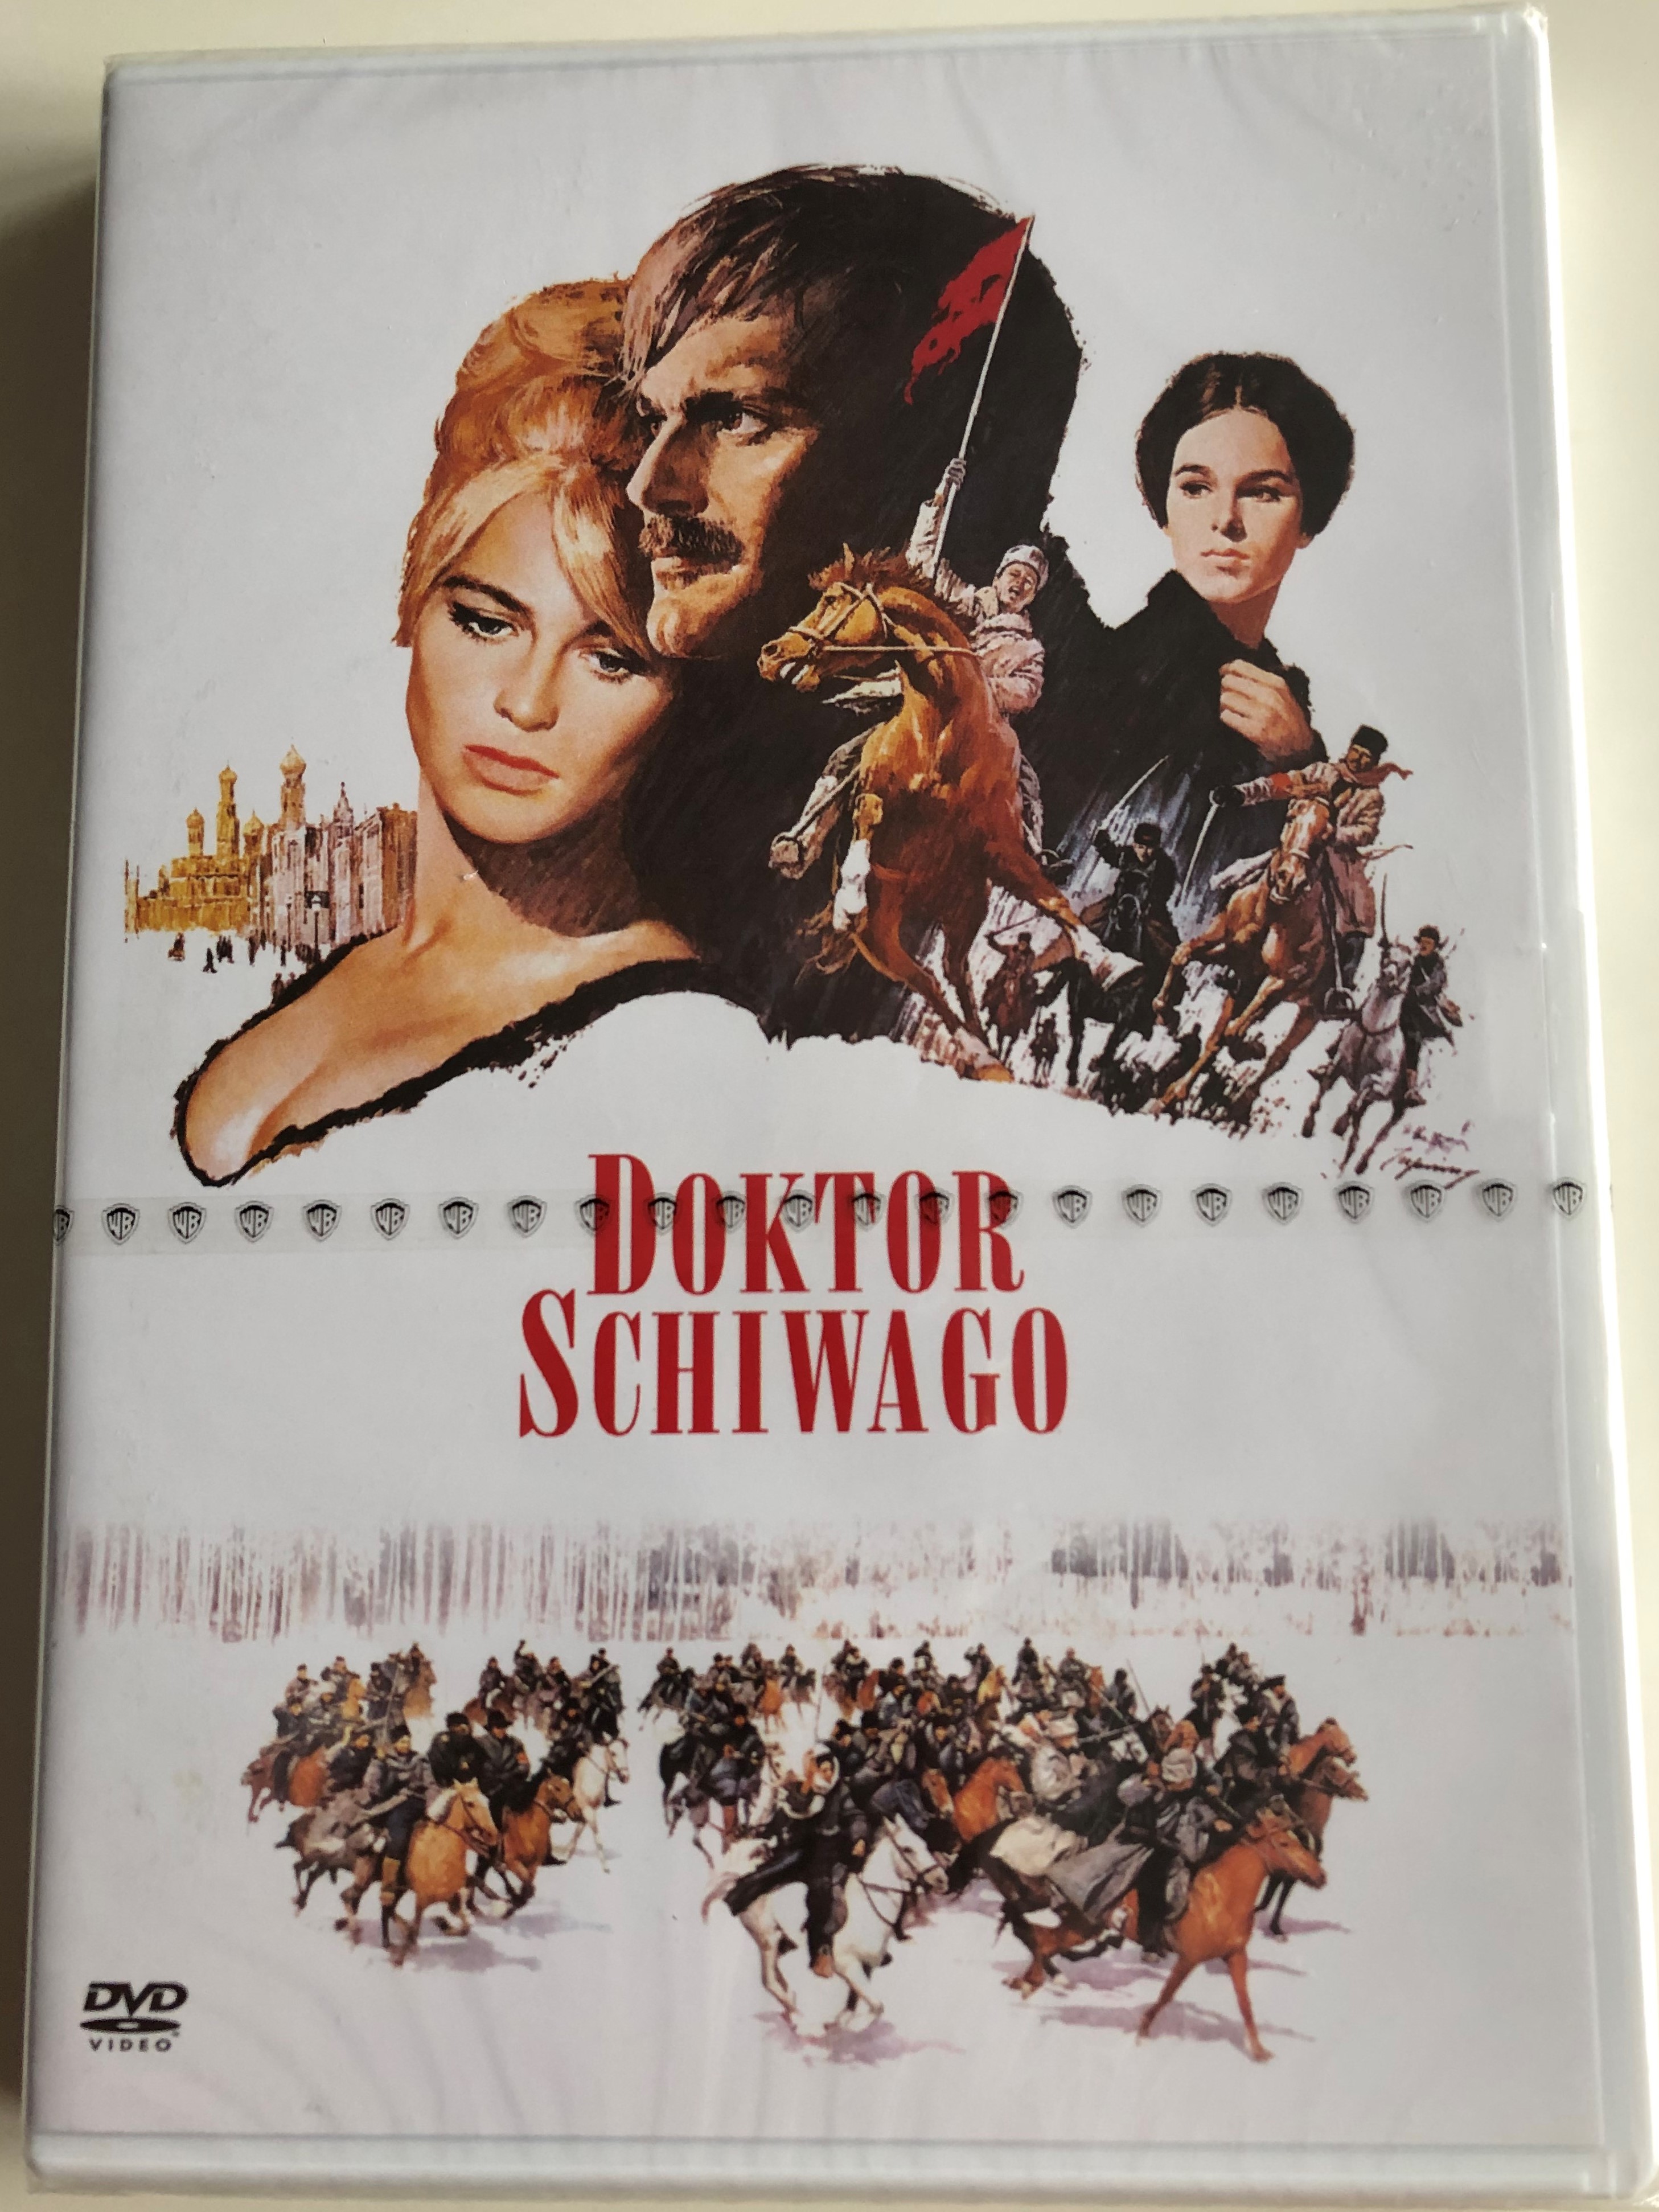 doktor-schiwago-dvd-1965-il-dottor-ivago-1.jpg